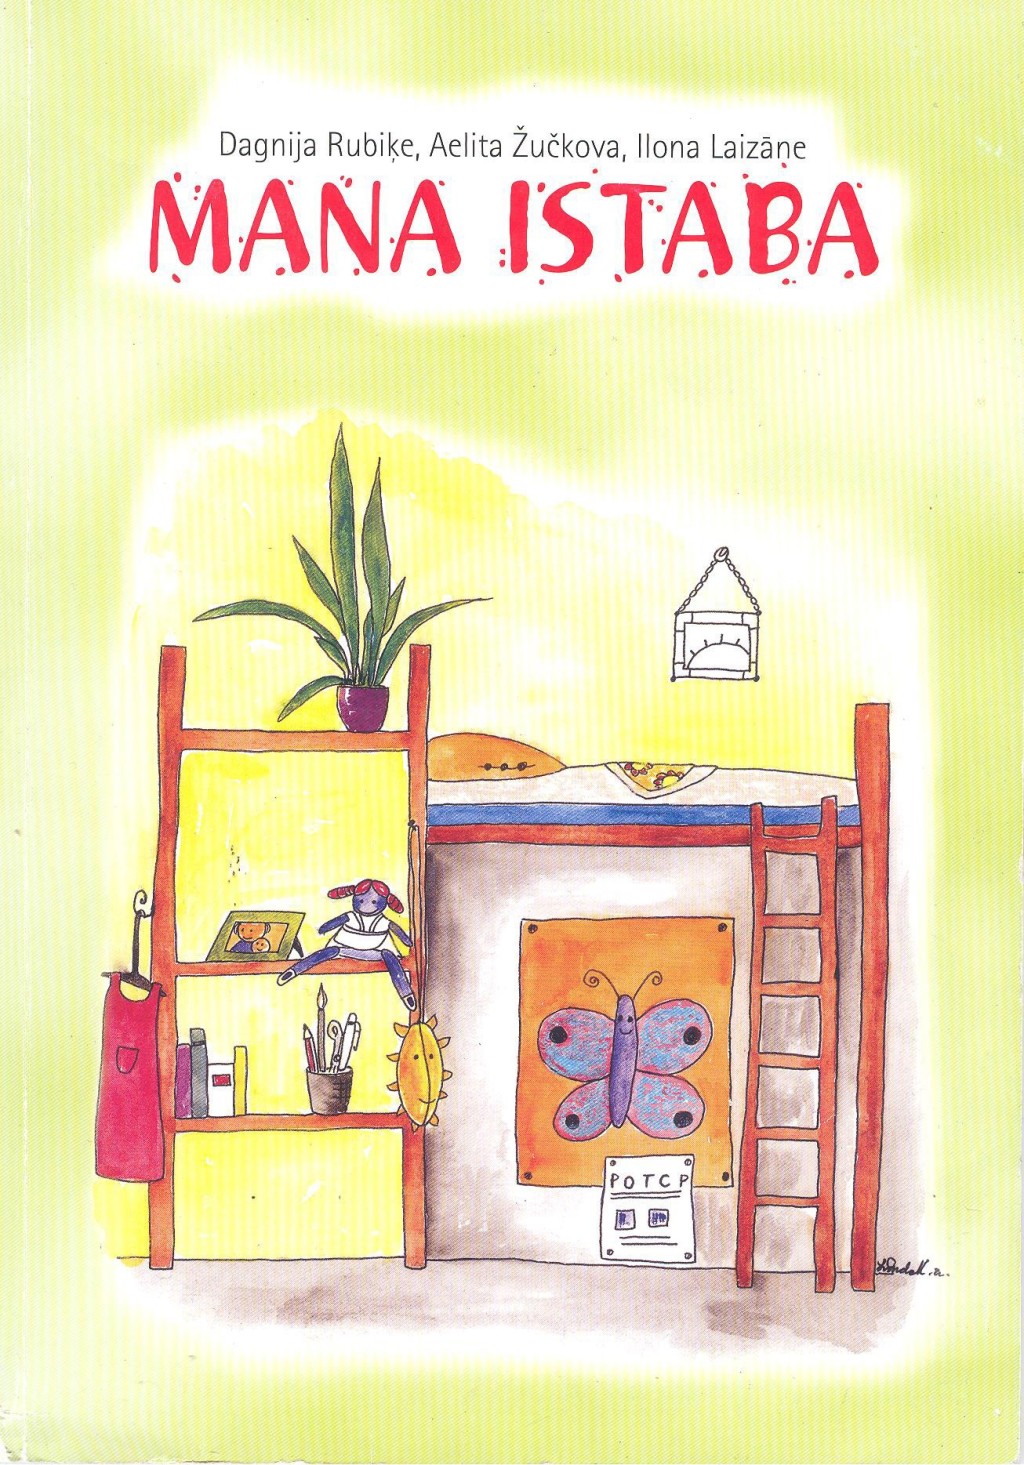 Ilustrācija grāmatai "Mana istaba"